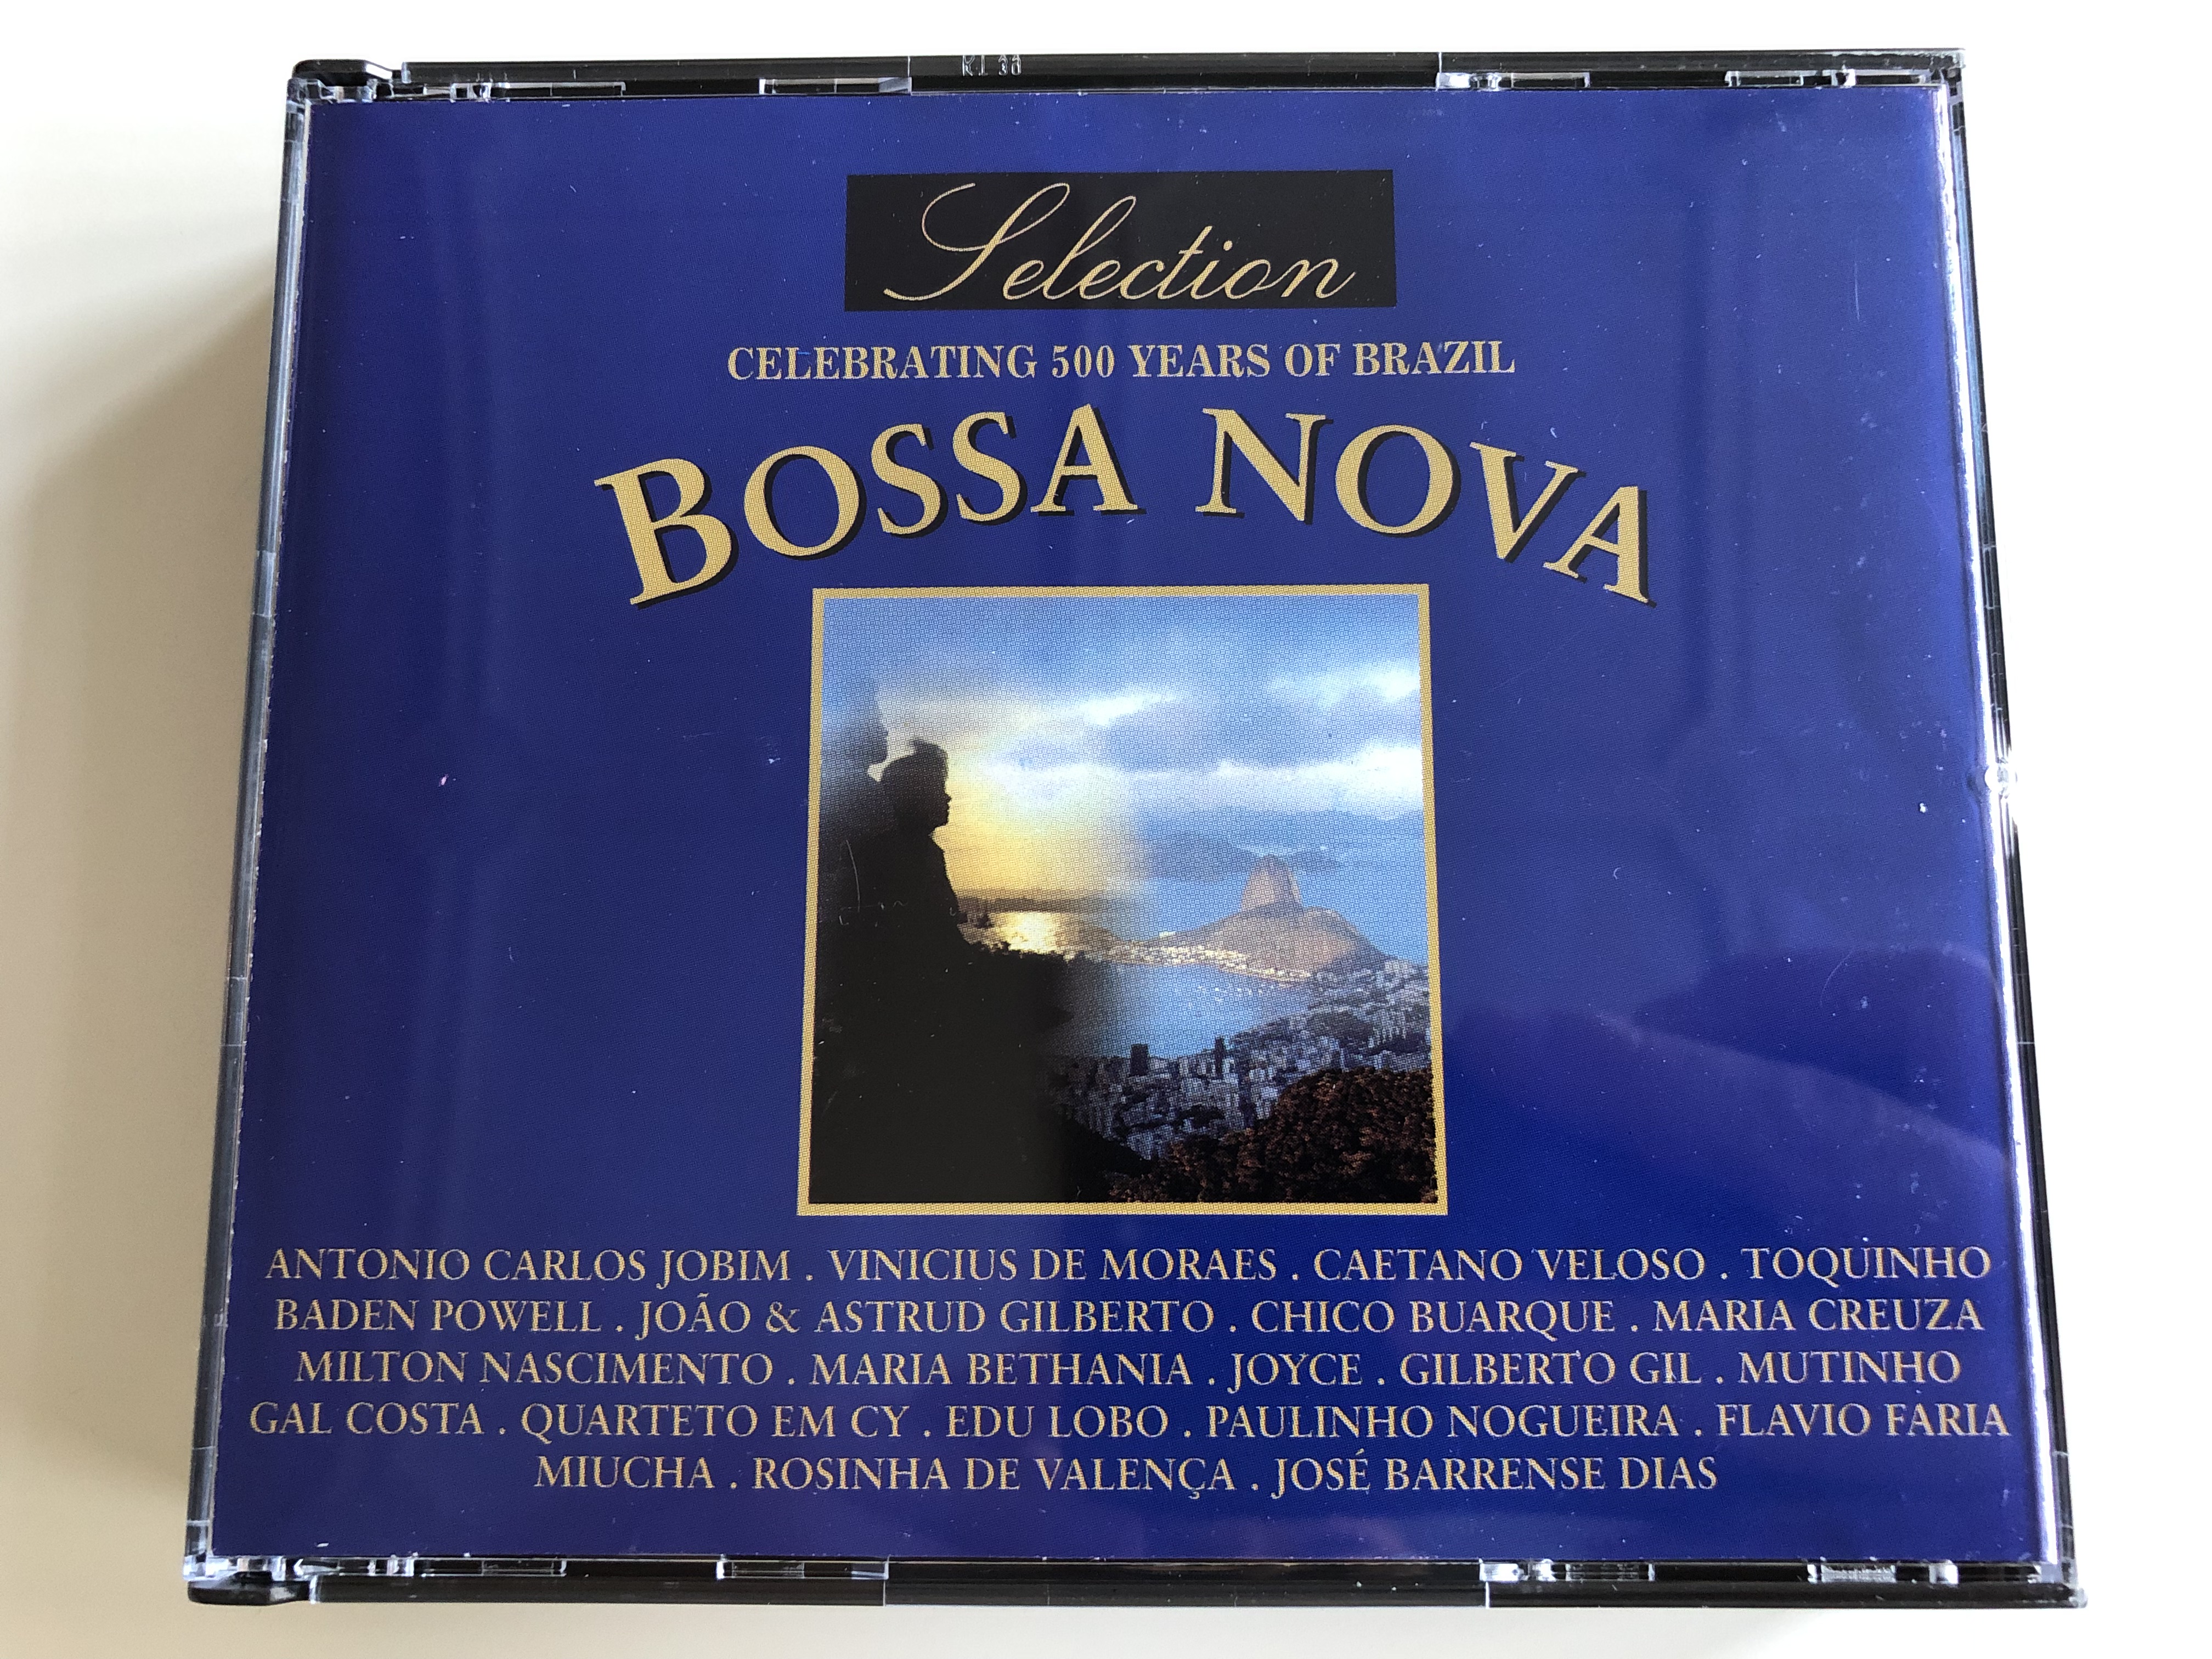 bossa-nova-selection-celebrating-500-years-of-brazil-antonio-carlos-jobim-caetano-veloso-joao-astrud-gilberto-joyce-gilberto-gil-gal-costa-flavio-faria-jos-barrense-dias-audio-cd-2000-dcd-936-blu-2-cd-1-.jpg